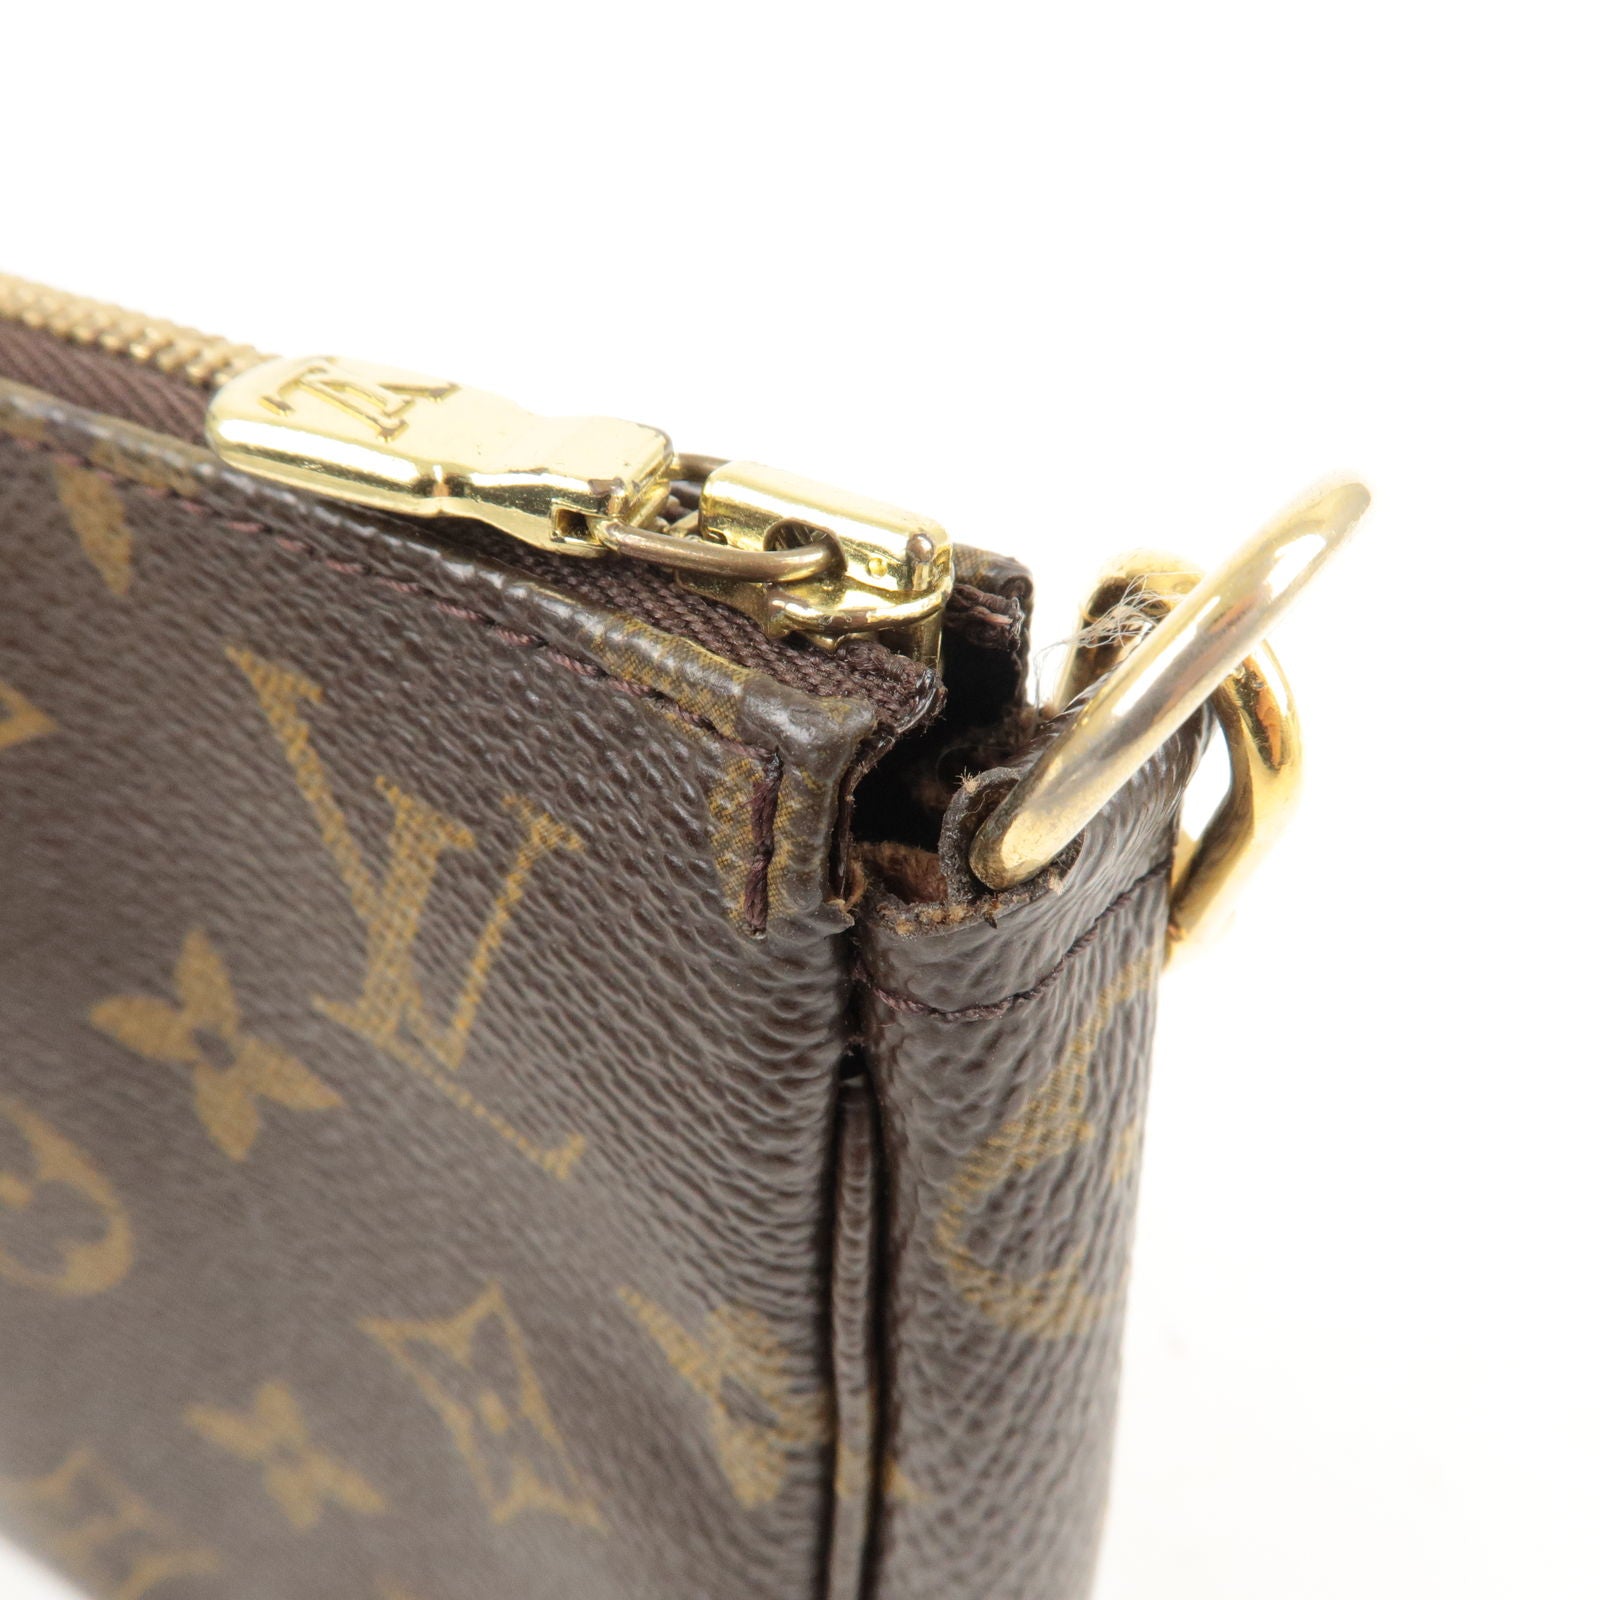 LOUIS VUITTON ACCESSOIRE CLUTCH/WRIST BAG, patent leather with